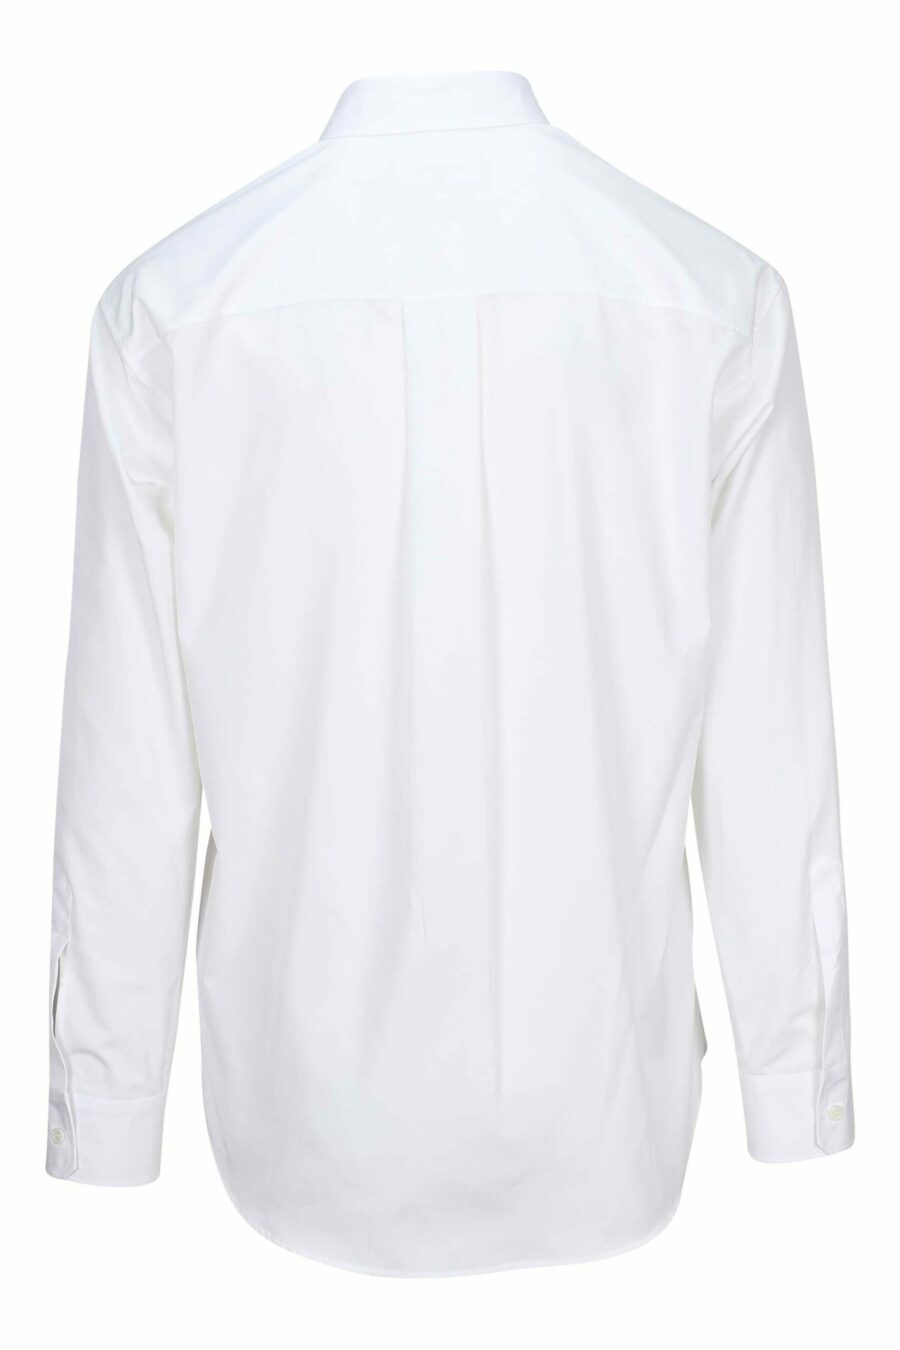 White shirt with maxilogo "icon" - 8052134107577 1 scaled